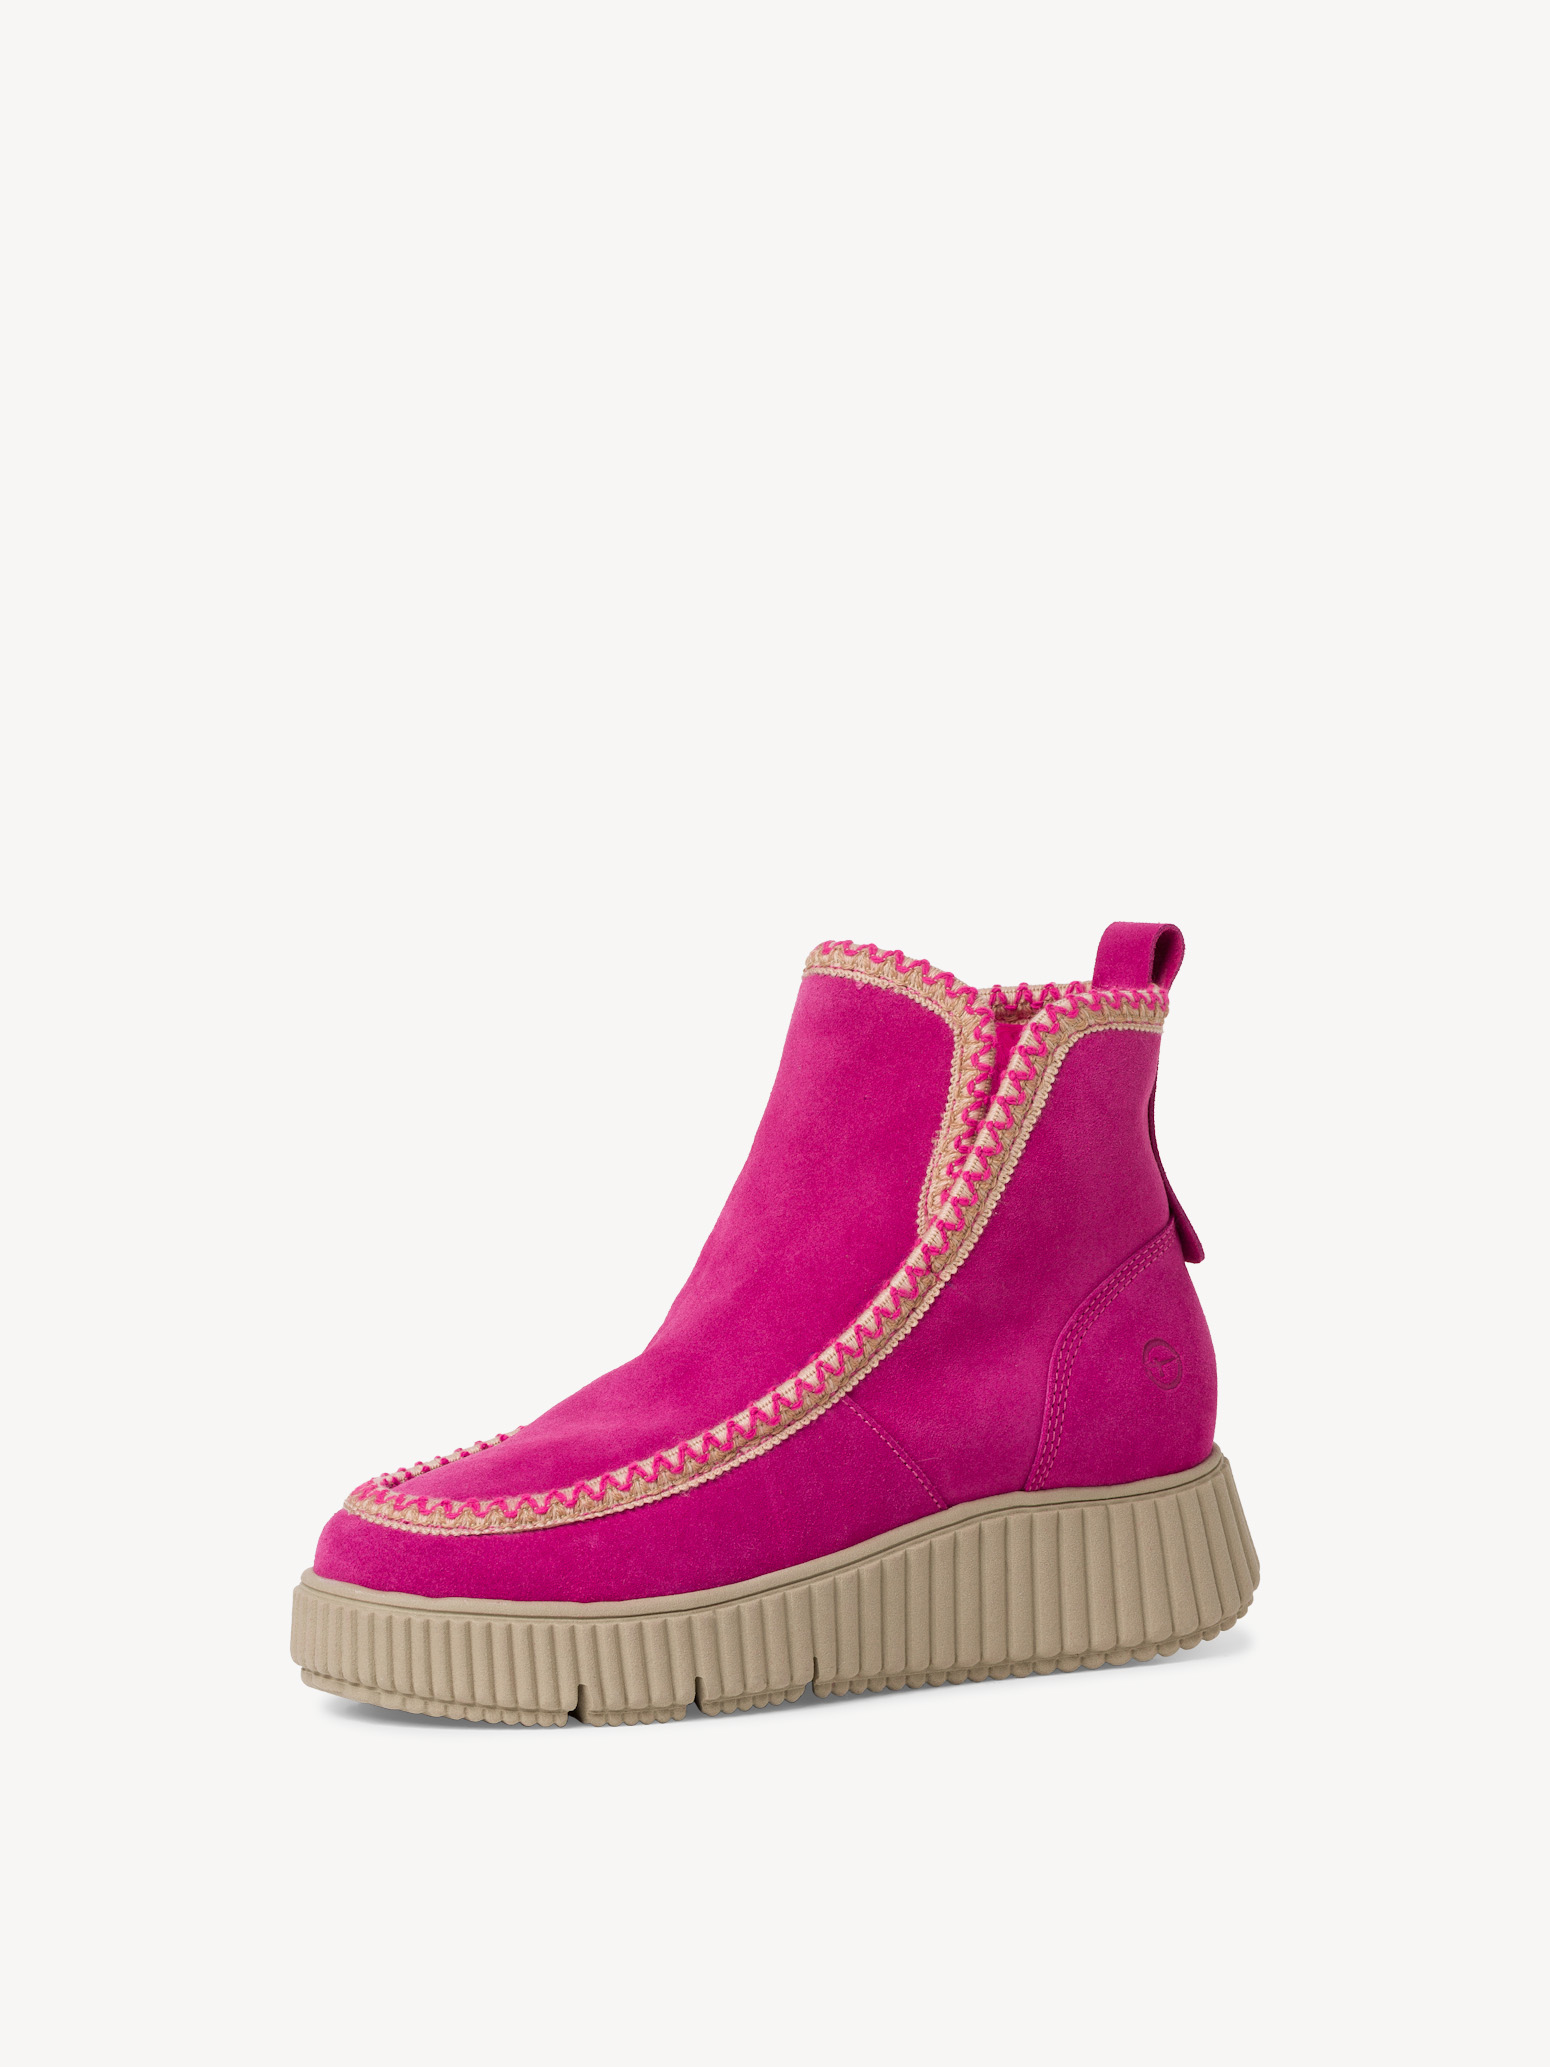 Lederstiefelette - pink Warmfutter 1-26865-41-513: online Boots & kaufen! Stiefeletten Tamaris